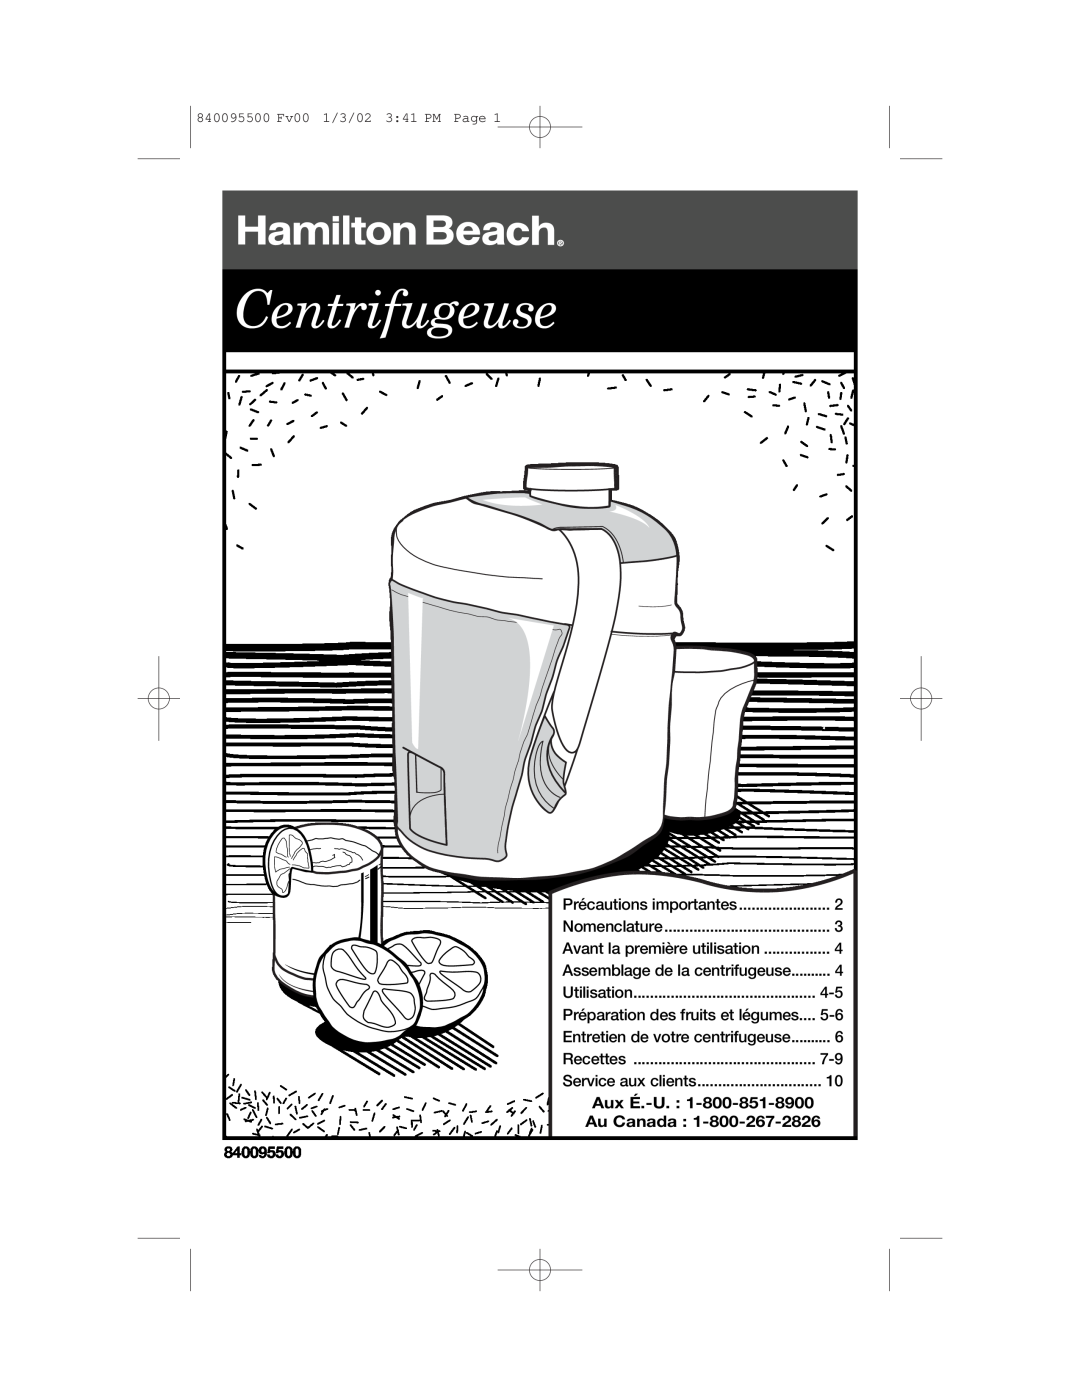 Hamilton Beach 840095500 manual Centrifugeuse, Aux É.-U, Au Canada 